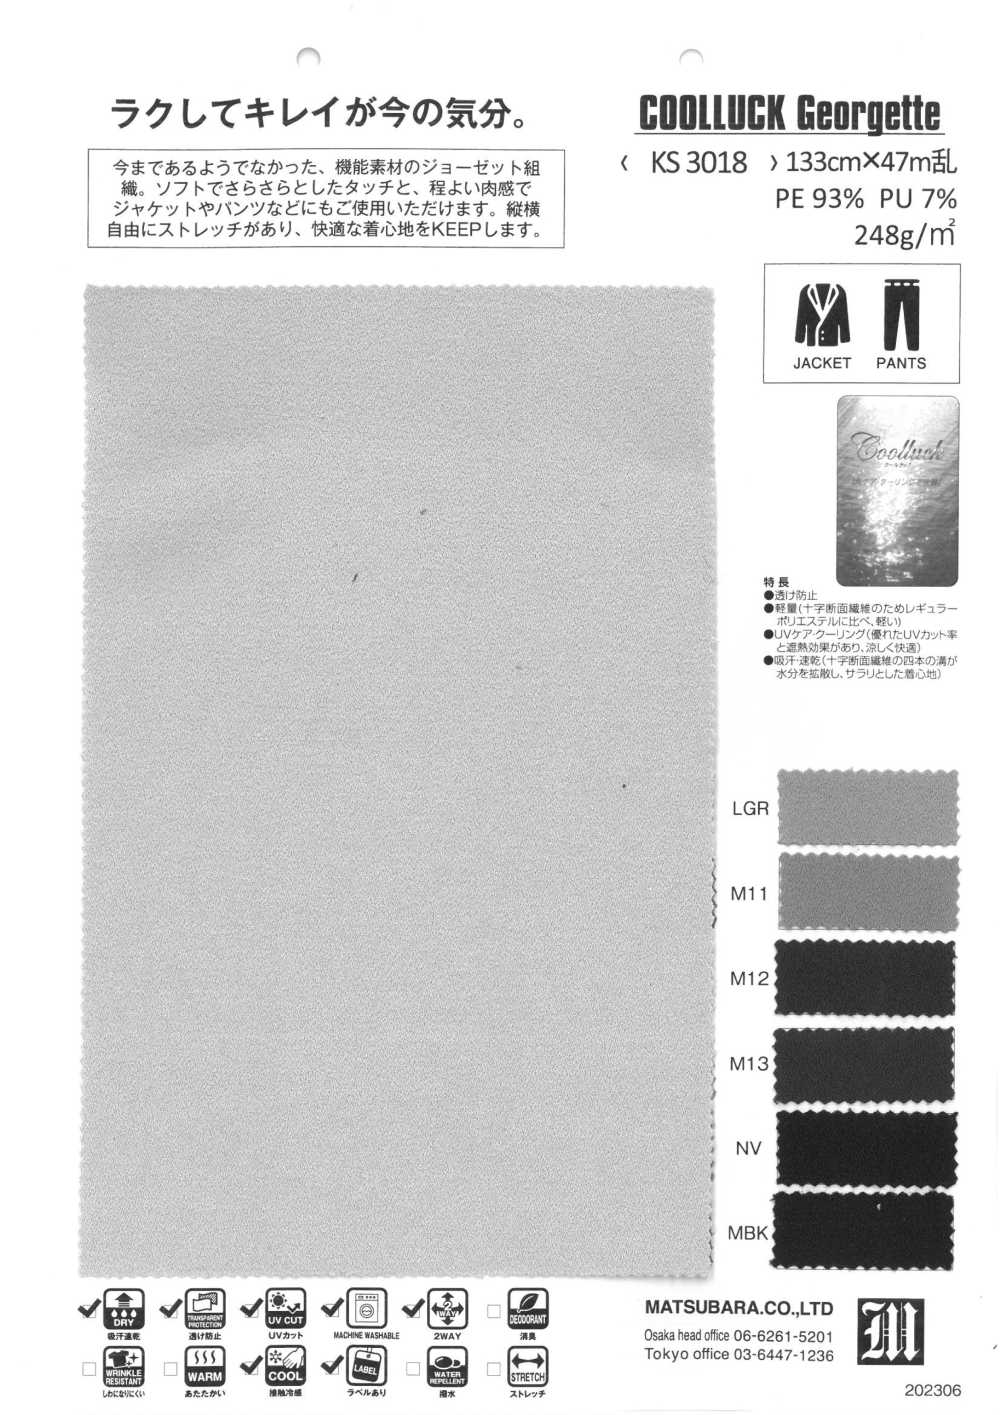 KS3018 COOLLUCK Georgette[Textilgewebe] Matsubara